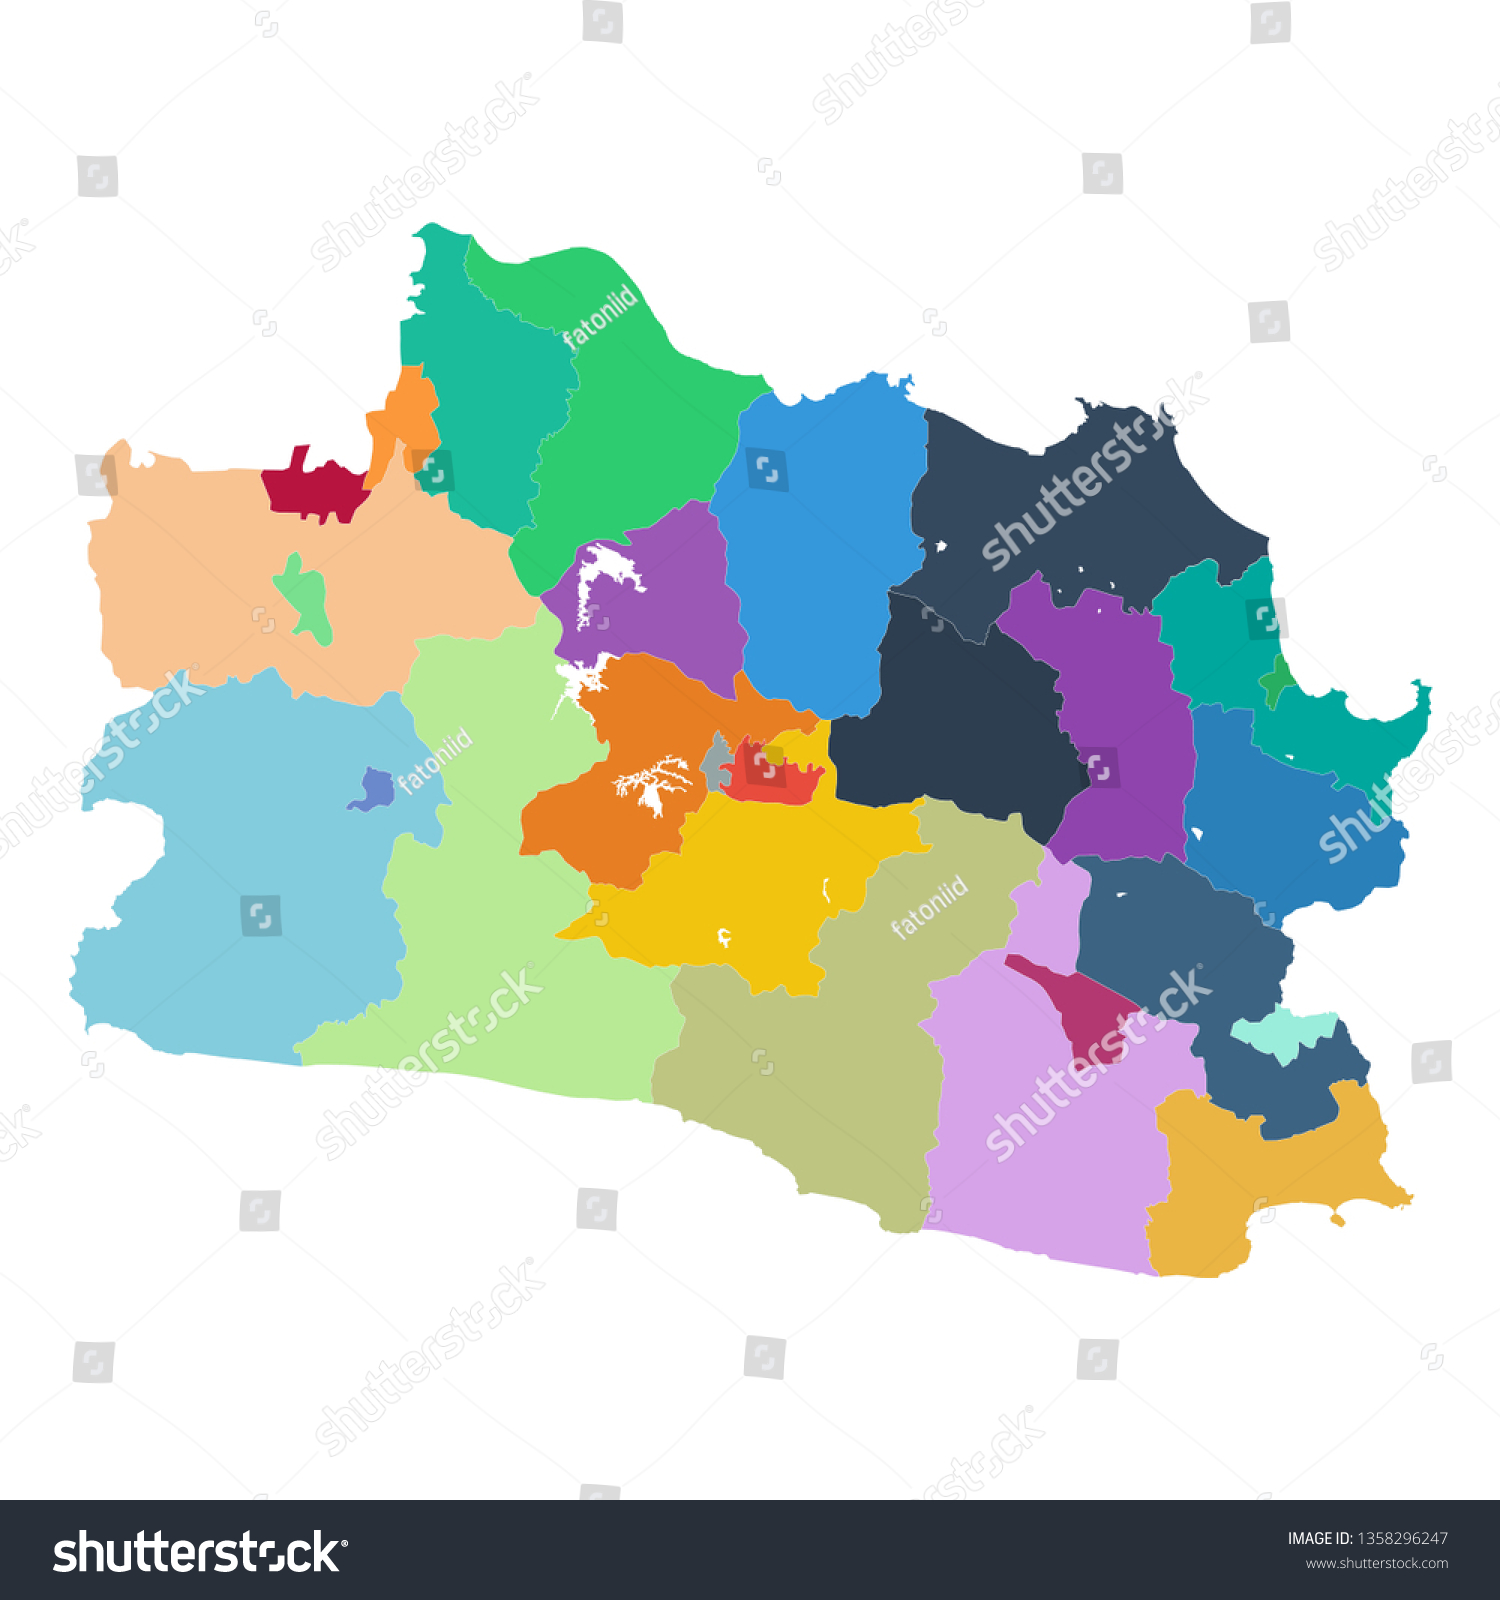 Peta Jawa Barat Vector Indonesian Province Jawa Barat Map Vector Stock Vector (Royalty Free)  1358296247 | Shutterstock